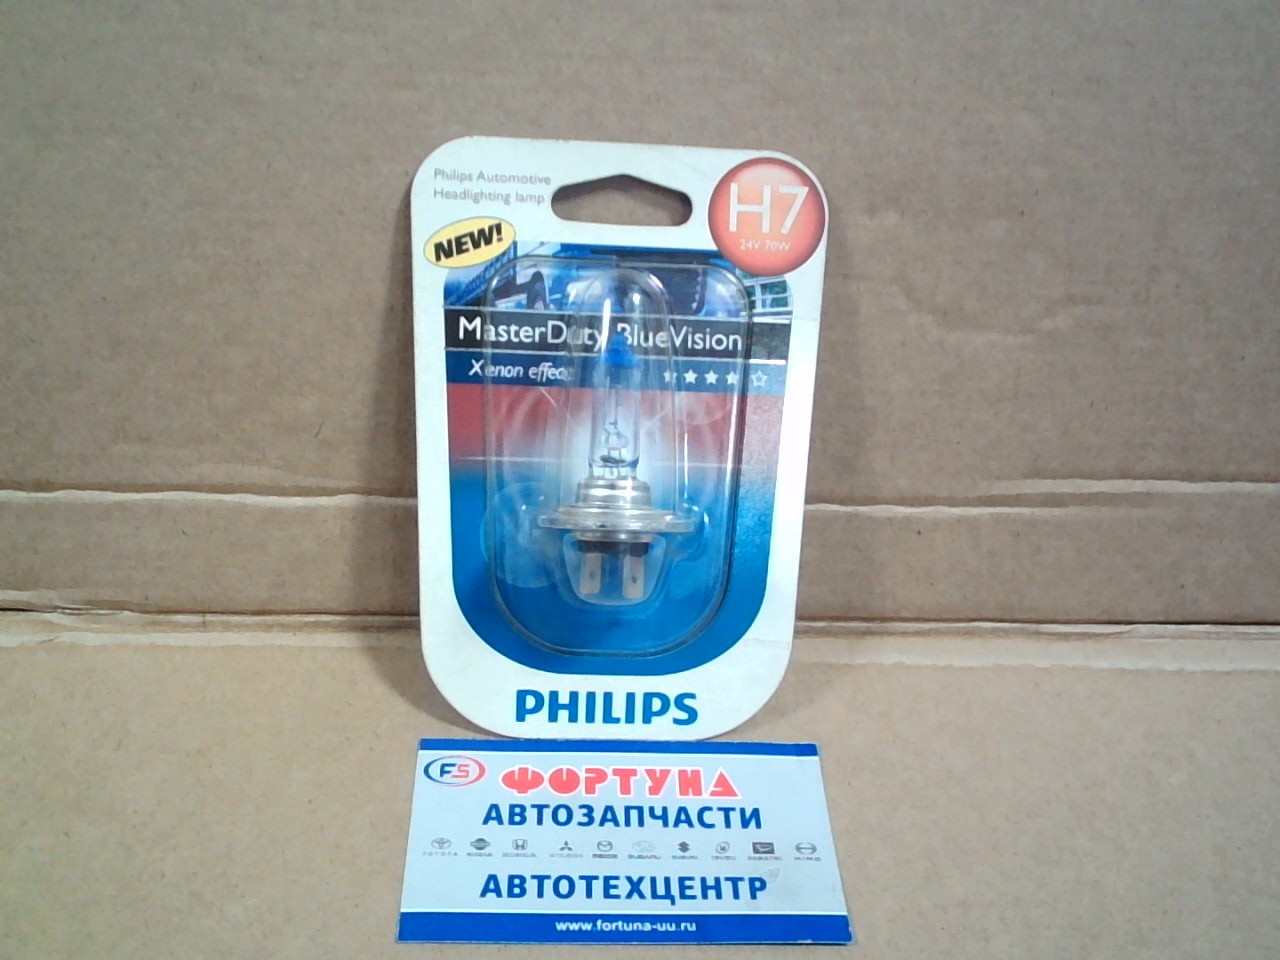 Лампочка Philips 13972MDBVB1 24V H7 70W /MasterDutyBlueVision, Xenon effect/виброустойчивая/(1шт) на  